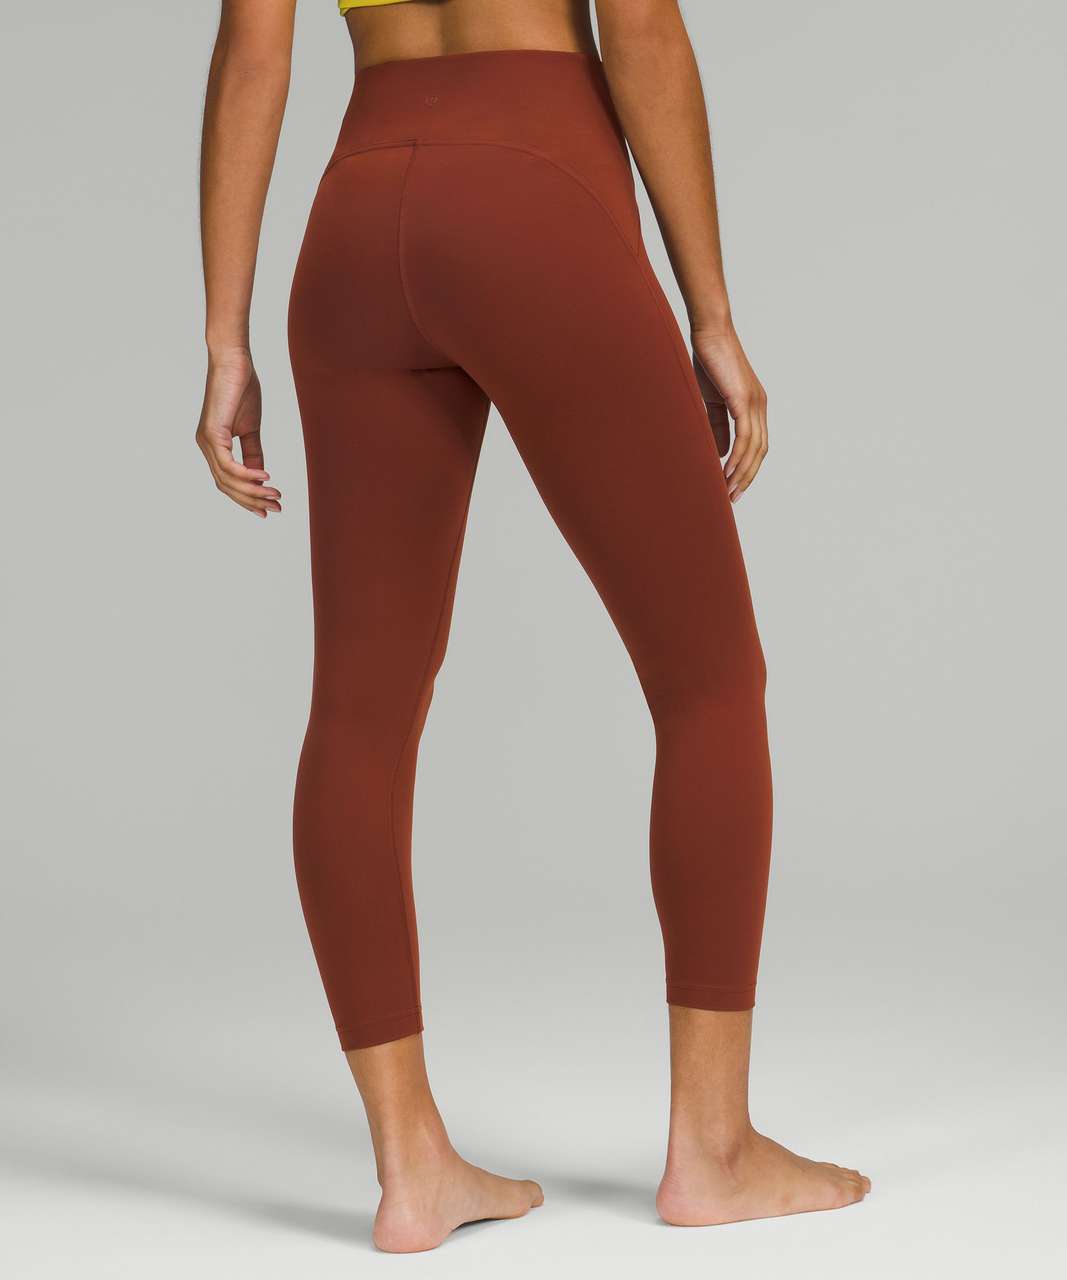 lululemon athletica, Pants & Jumpsuits, Lululemon Leggings Chocolate  Brown Soft Size 8